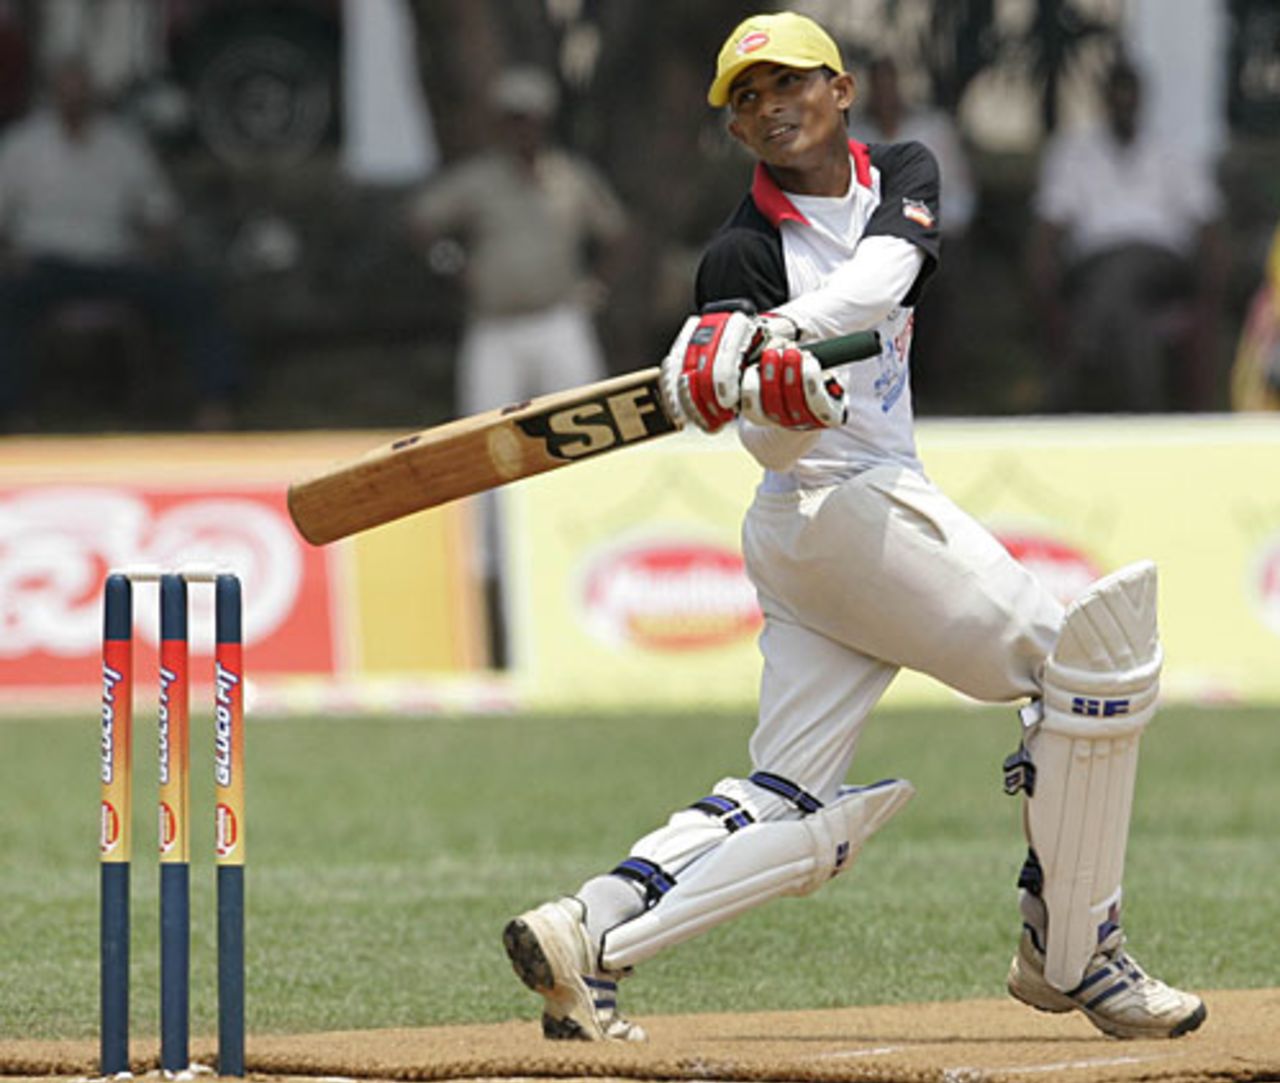 Hashan Perera goes on the attack, Mahanama College v St. Joseph's College, Glucofit Cricket Sixes, Colombo, October 18, 2009